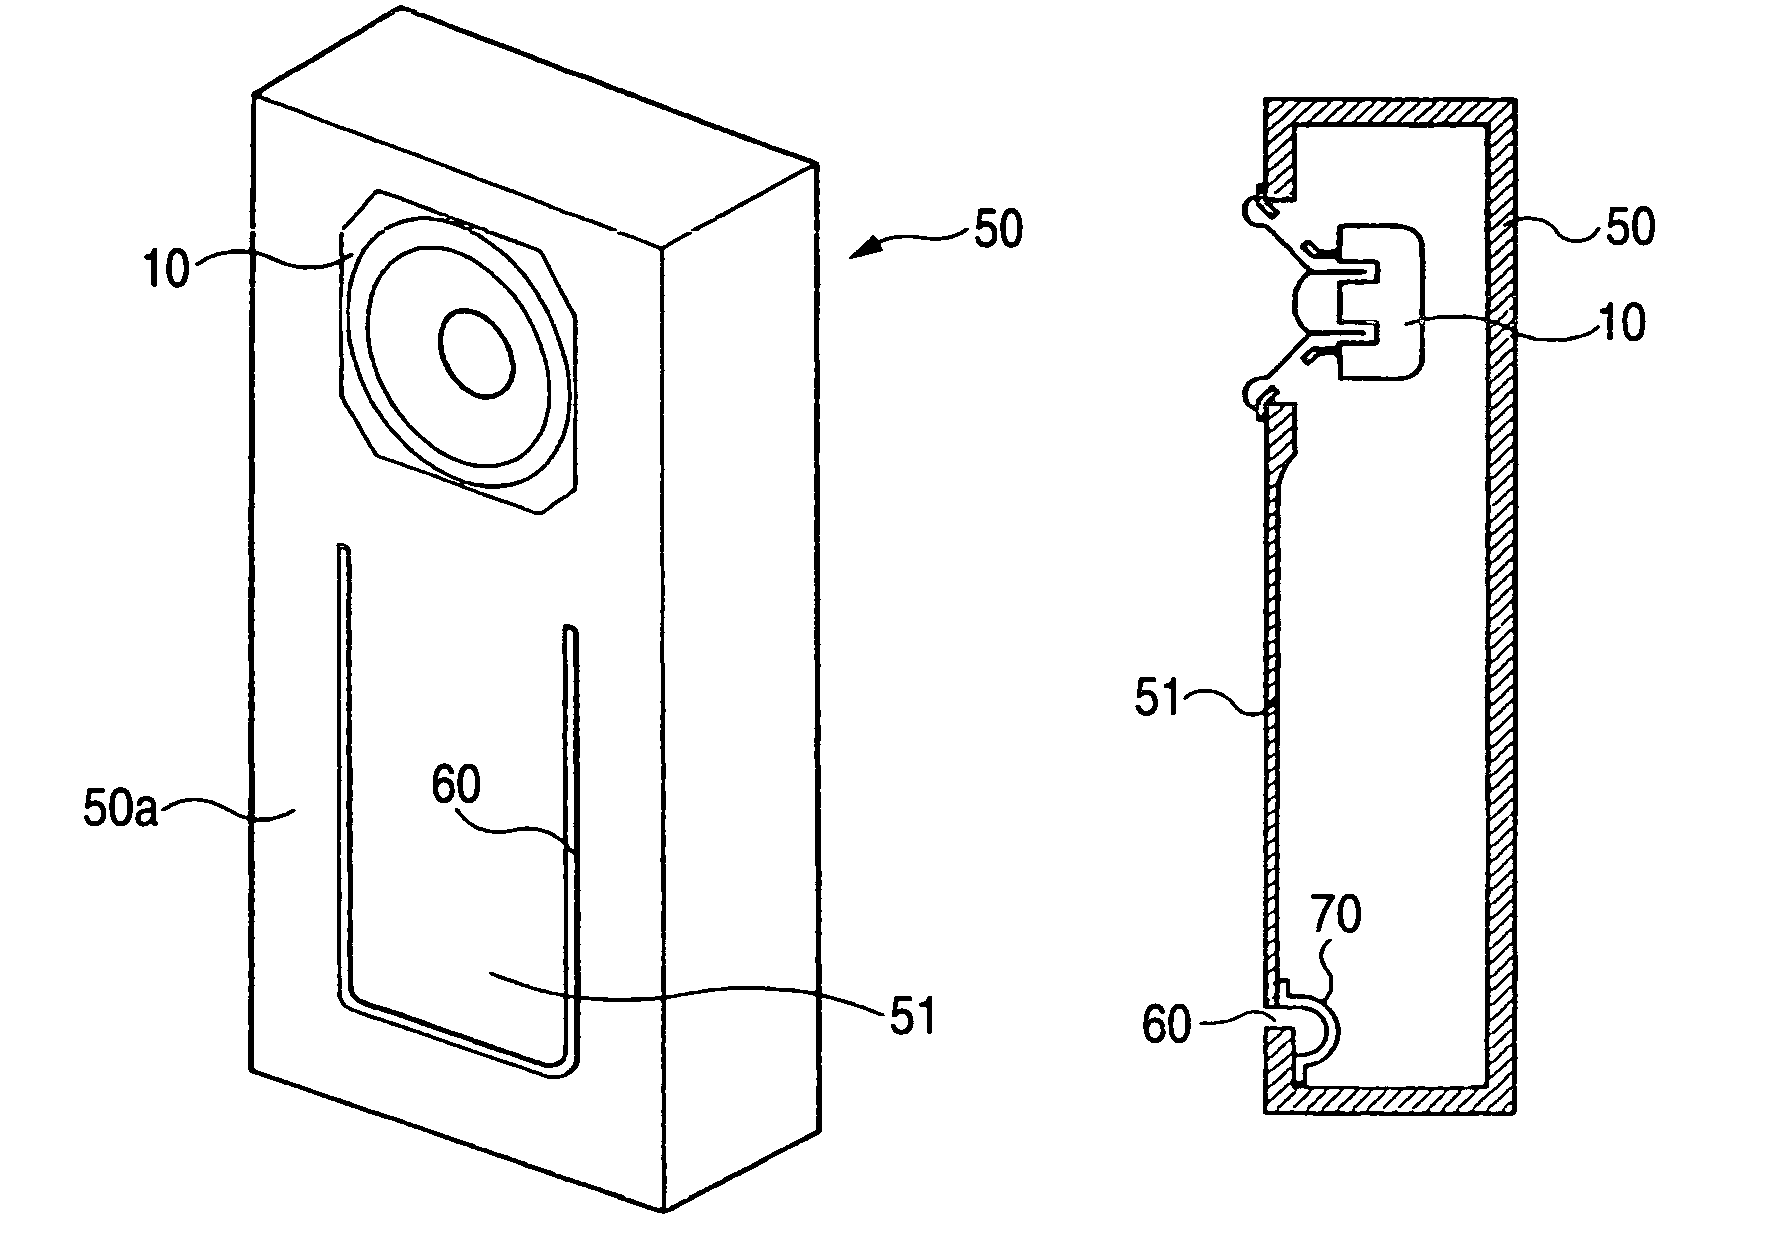 Speaker system and speaker enclosure